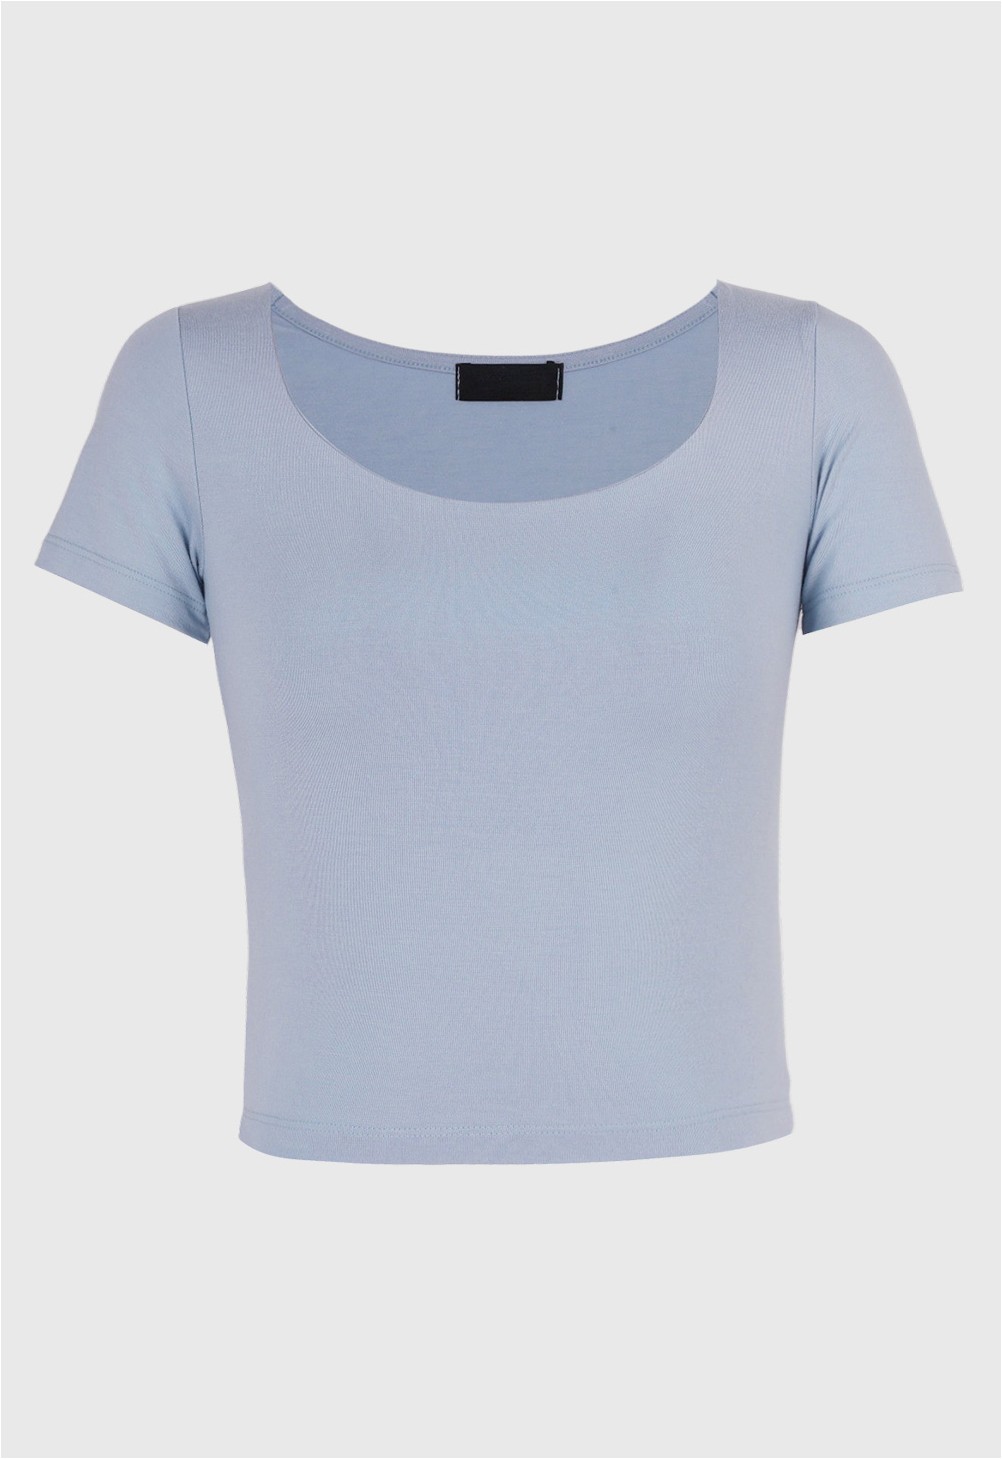 Benito Reef U Neck Crop Tee Shirt | Cropped for Women | KOODING